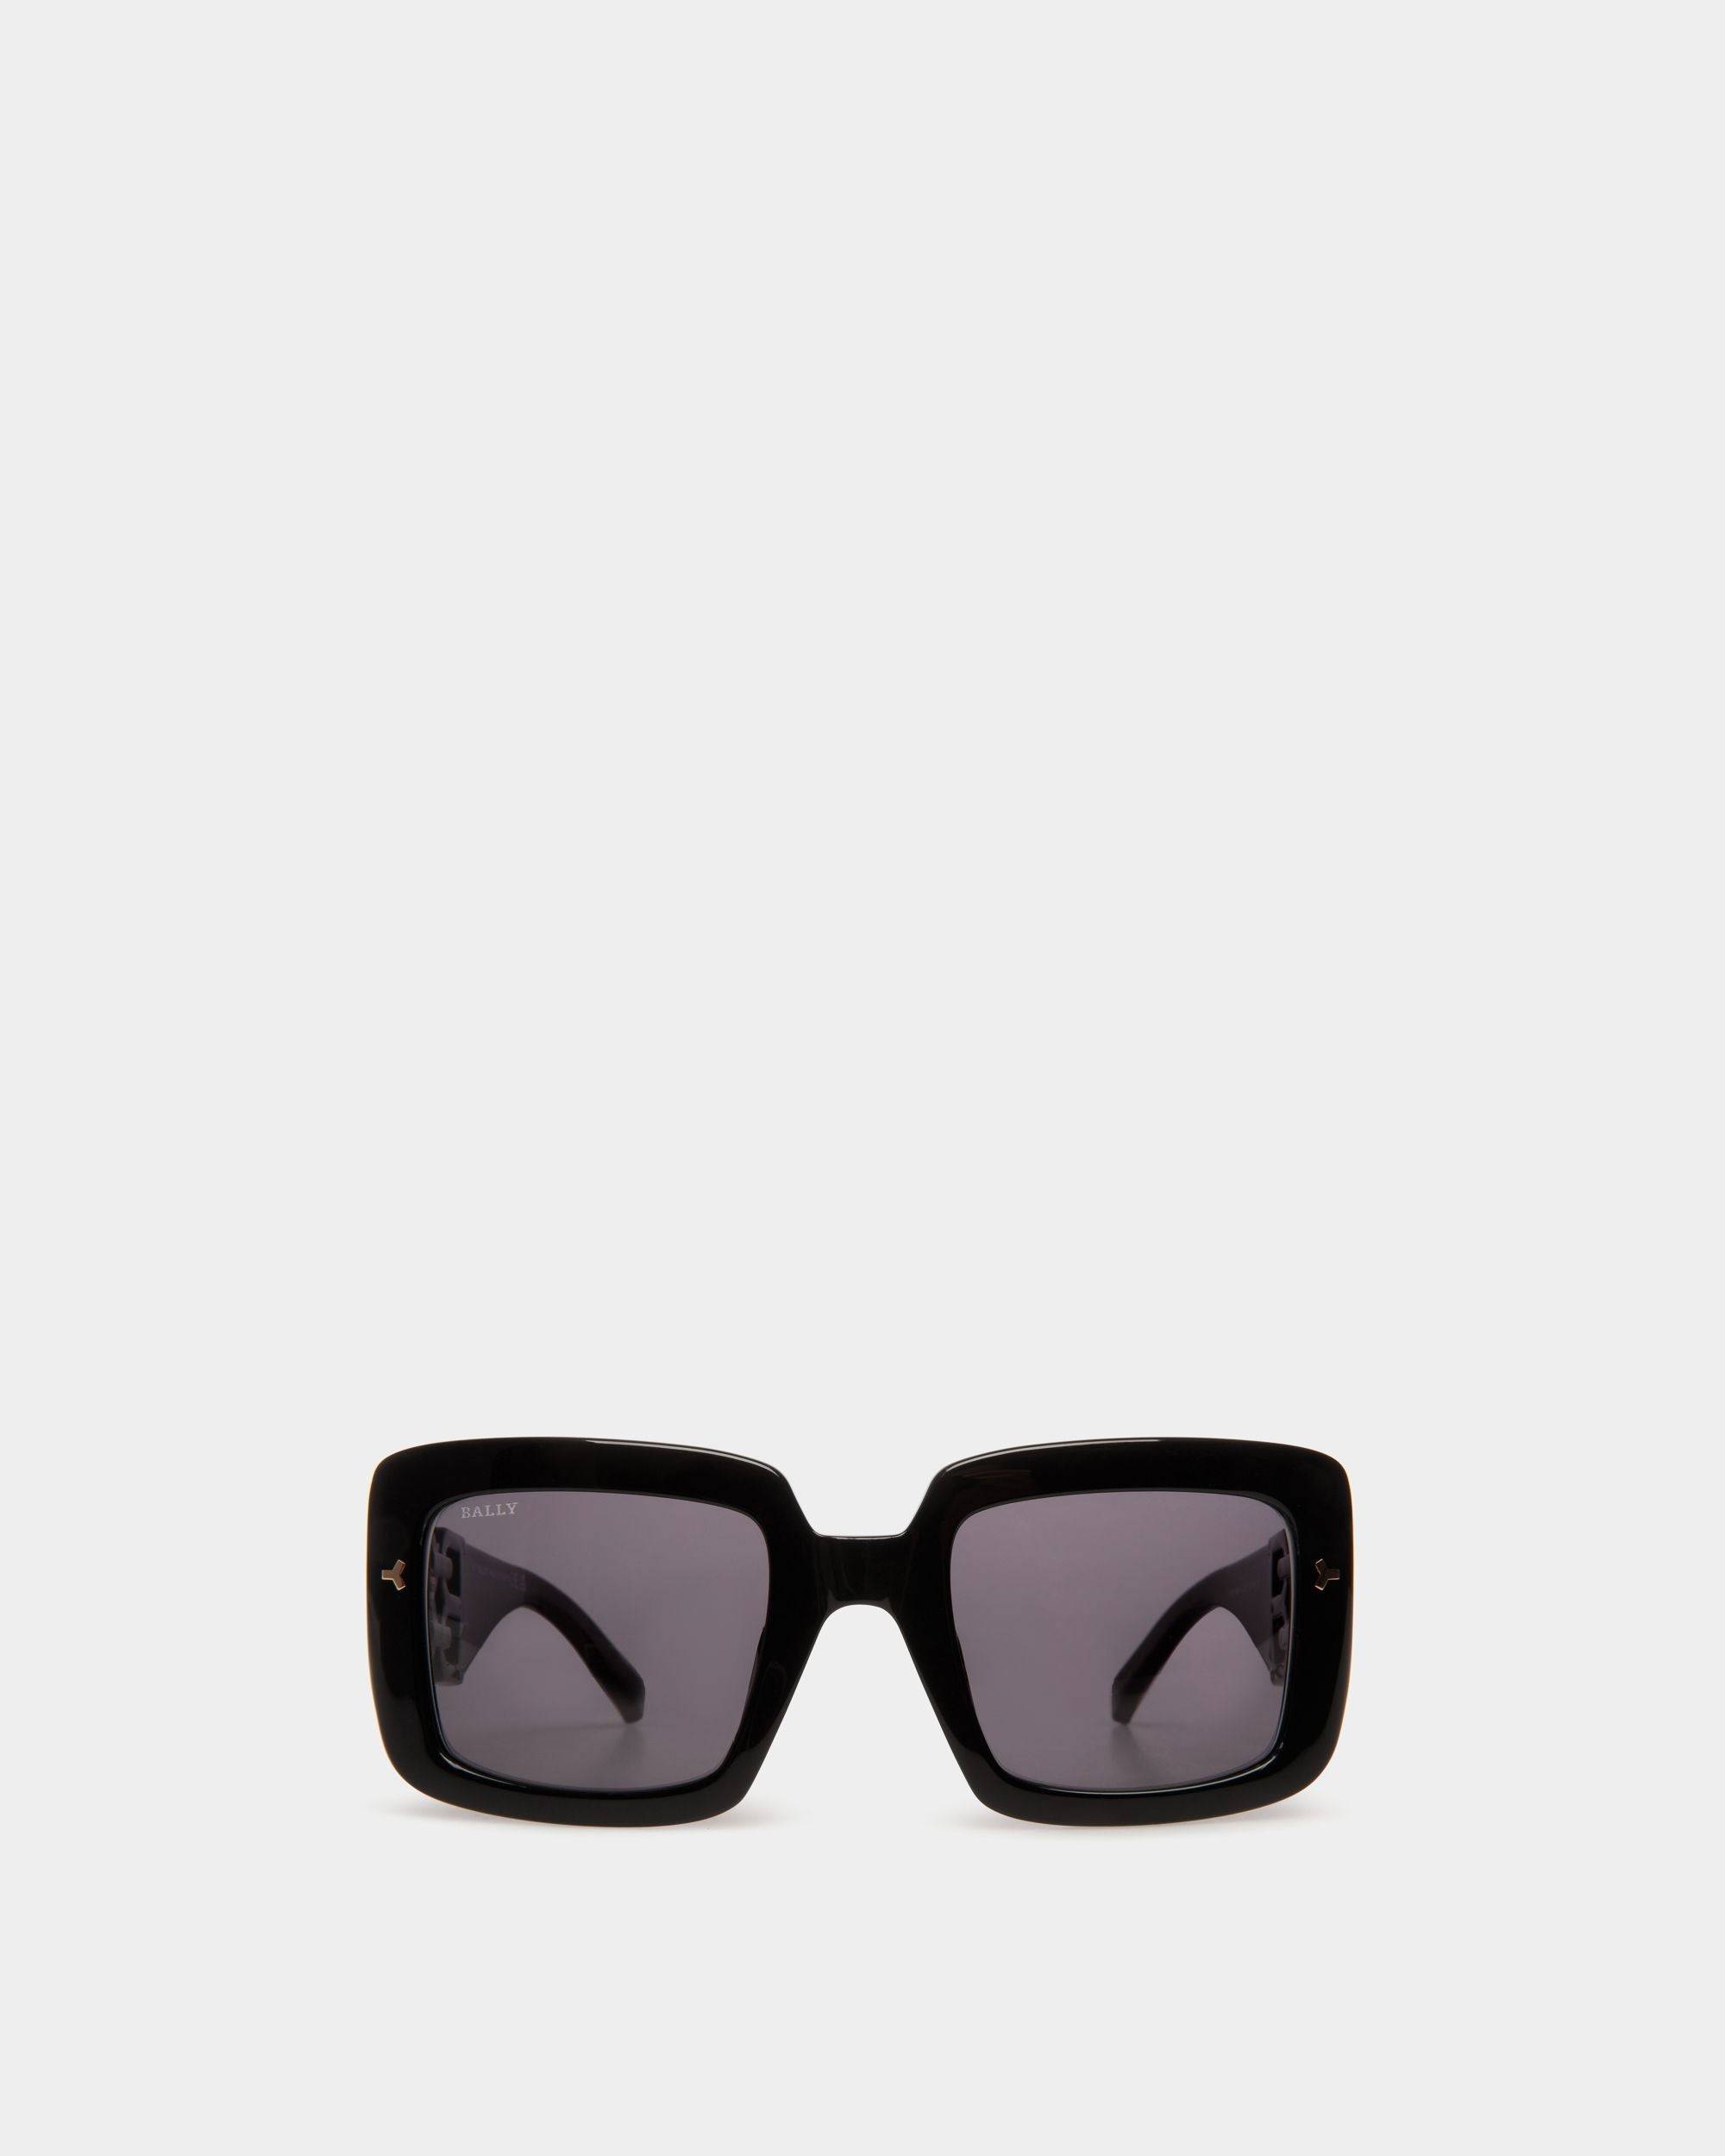 Filiana Sunglasses in Black & Smoke Lenses Acetate Sunglasses In Black - Women's - Bally - 01